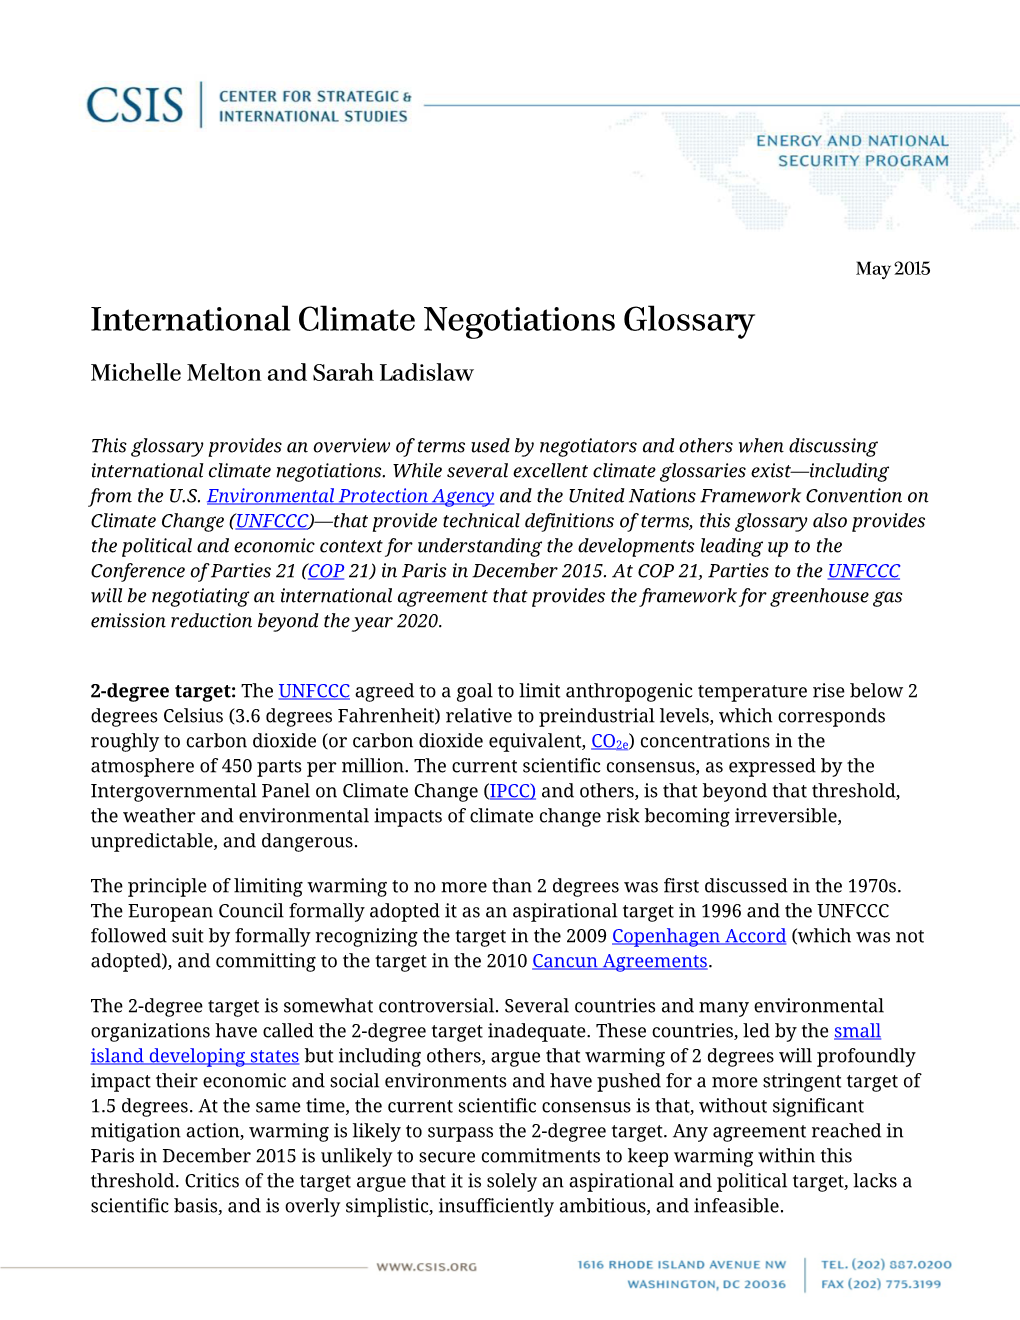 International Climate Negotiations Glossary